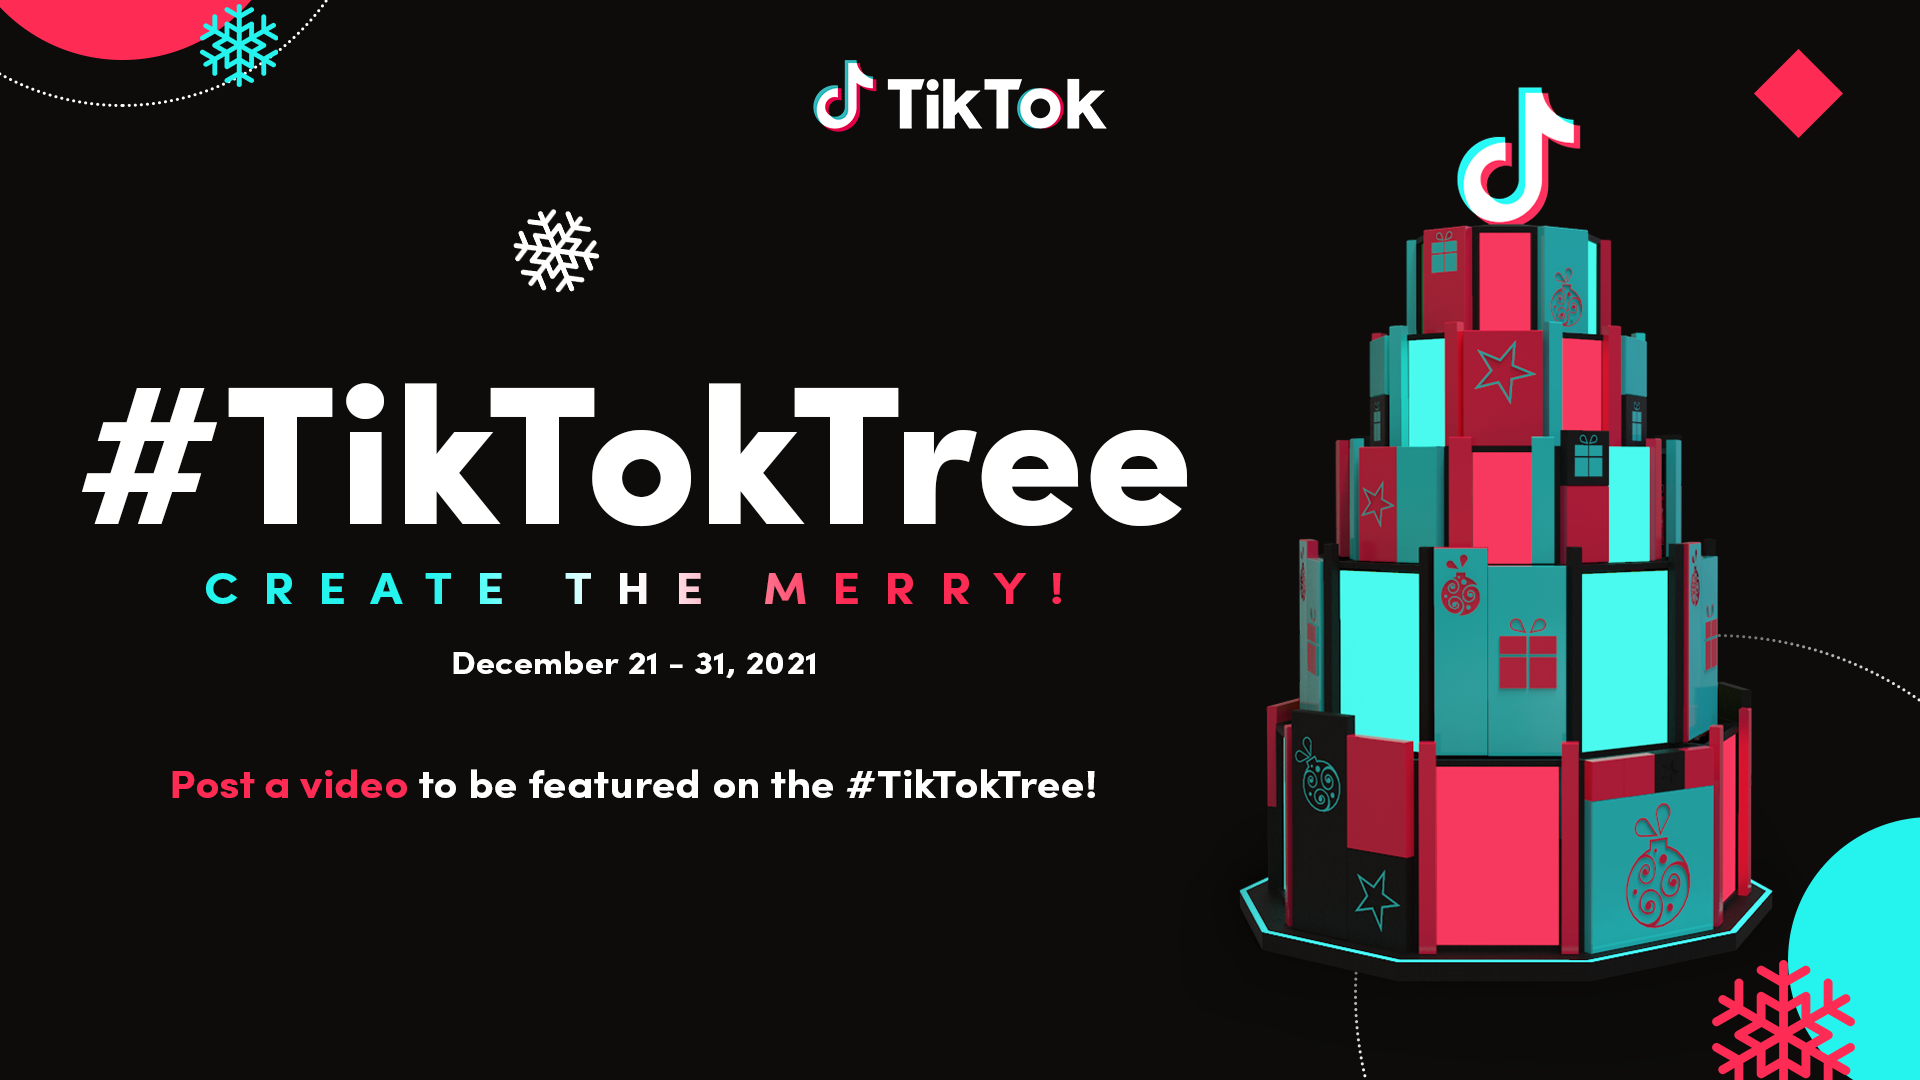 The TikTok Christmas Tree lights up Bonifacio High Street, spreading holiday cheer this December